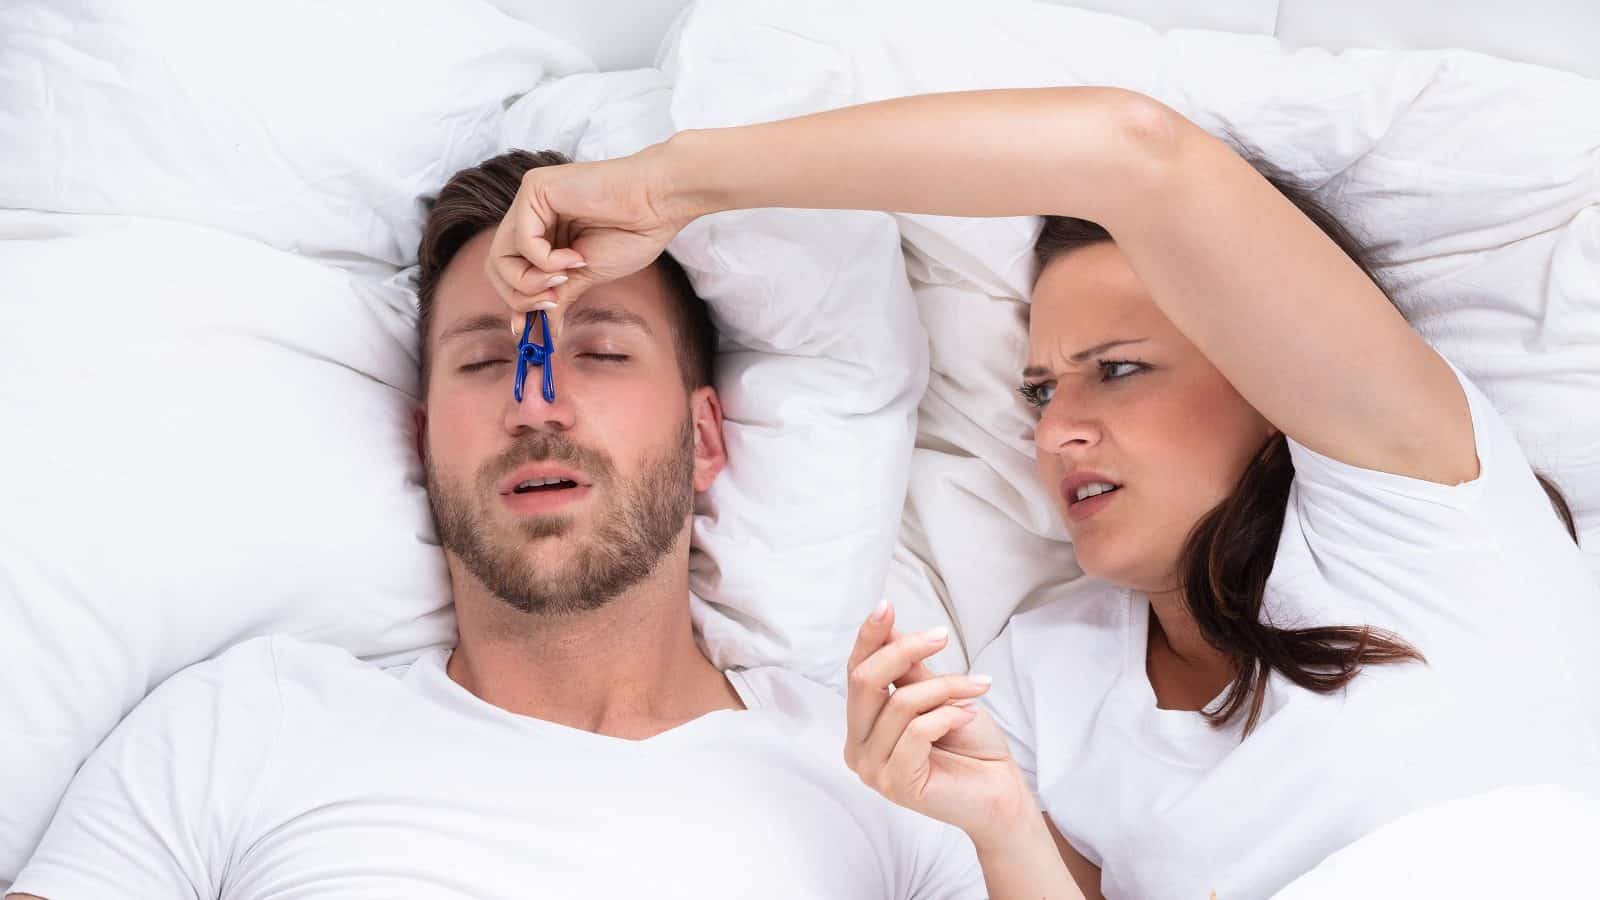 4 CPAP Alternatives You Should Consider for Sleep Apnea